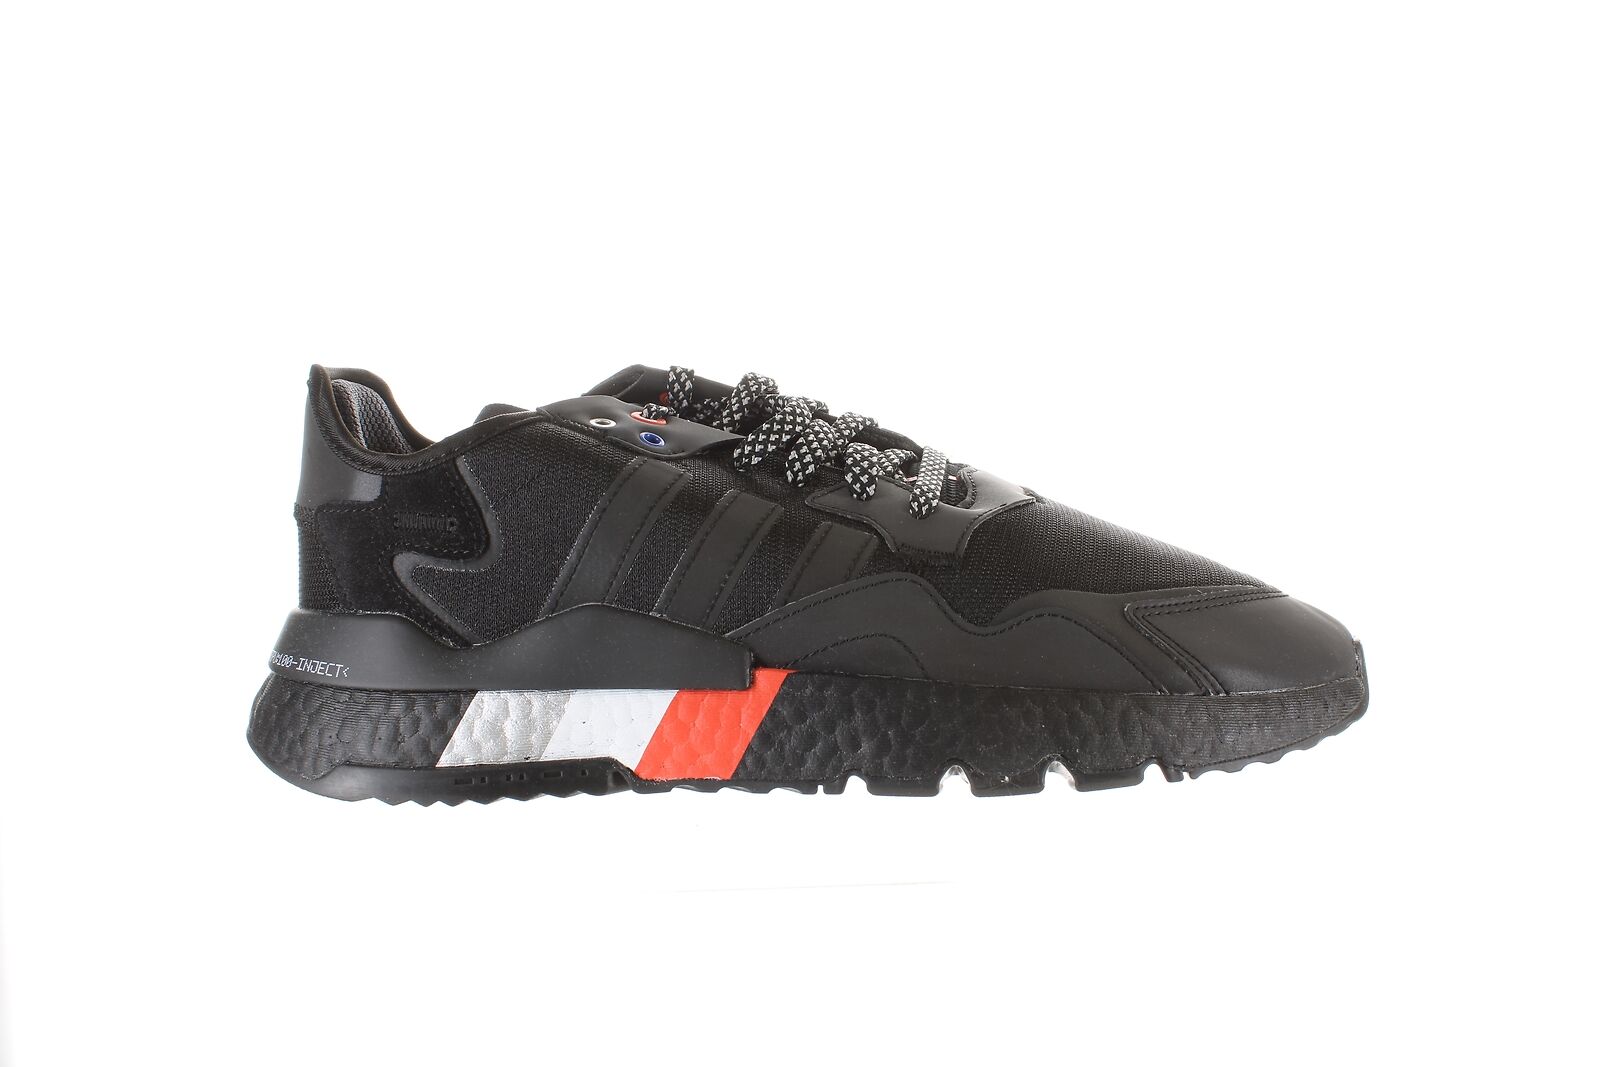 Adidas Mens Nite Jogger Black Running Shoes Size 11 (2279615)